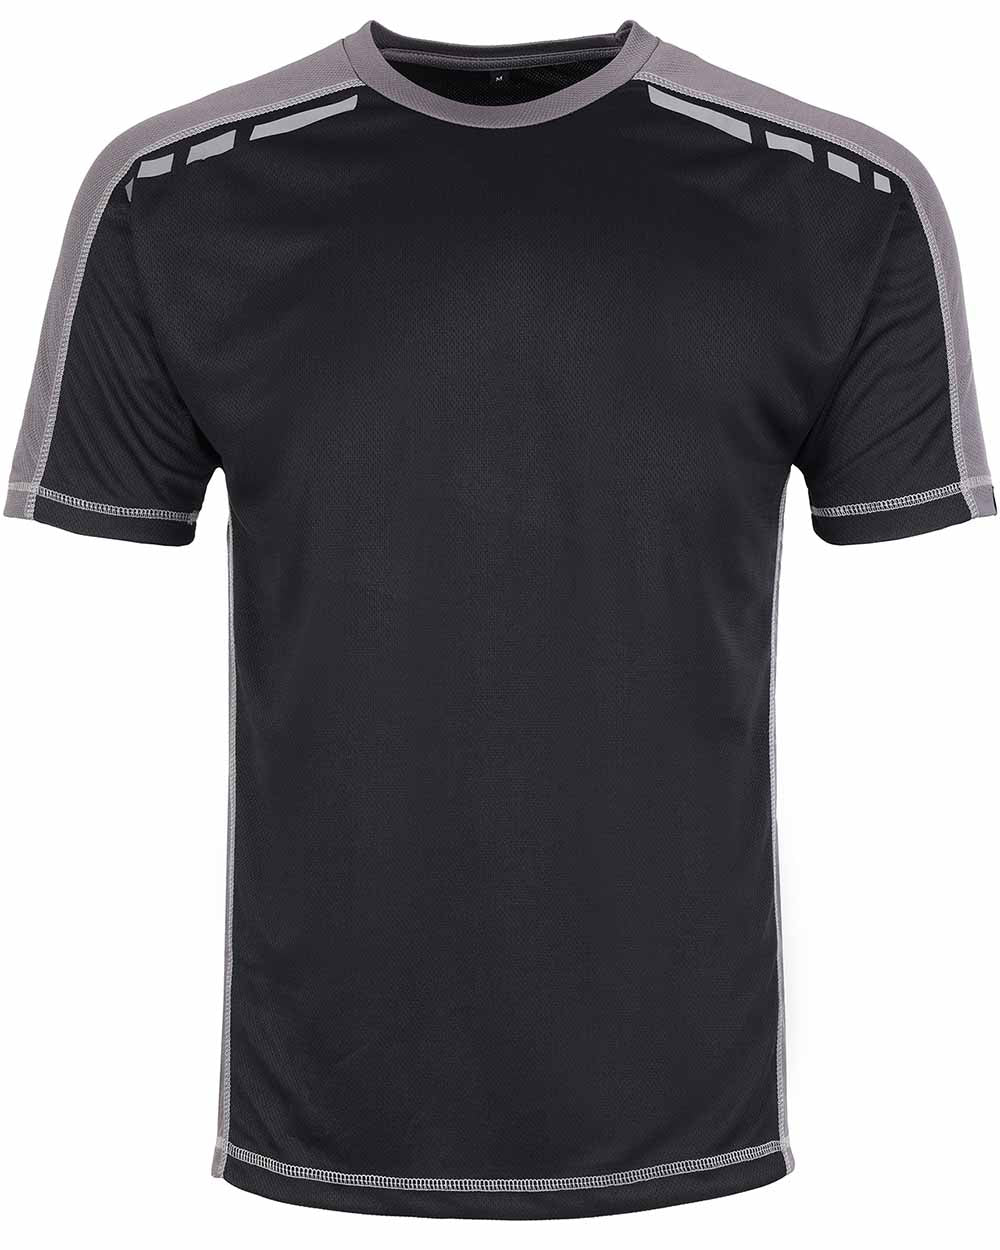 Black Coloured TuffStuff Elite T-Shirt On A White Background 